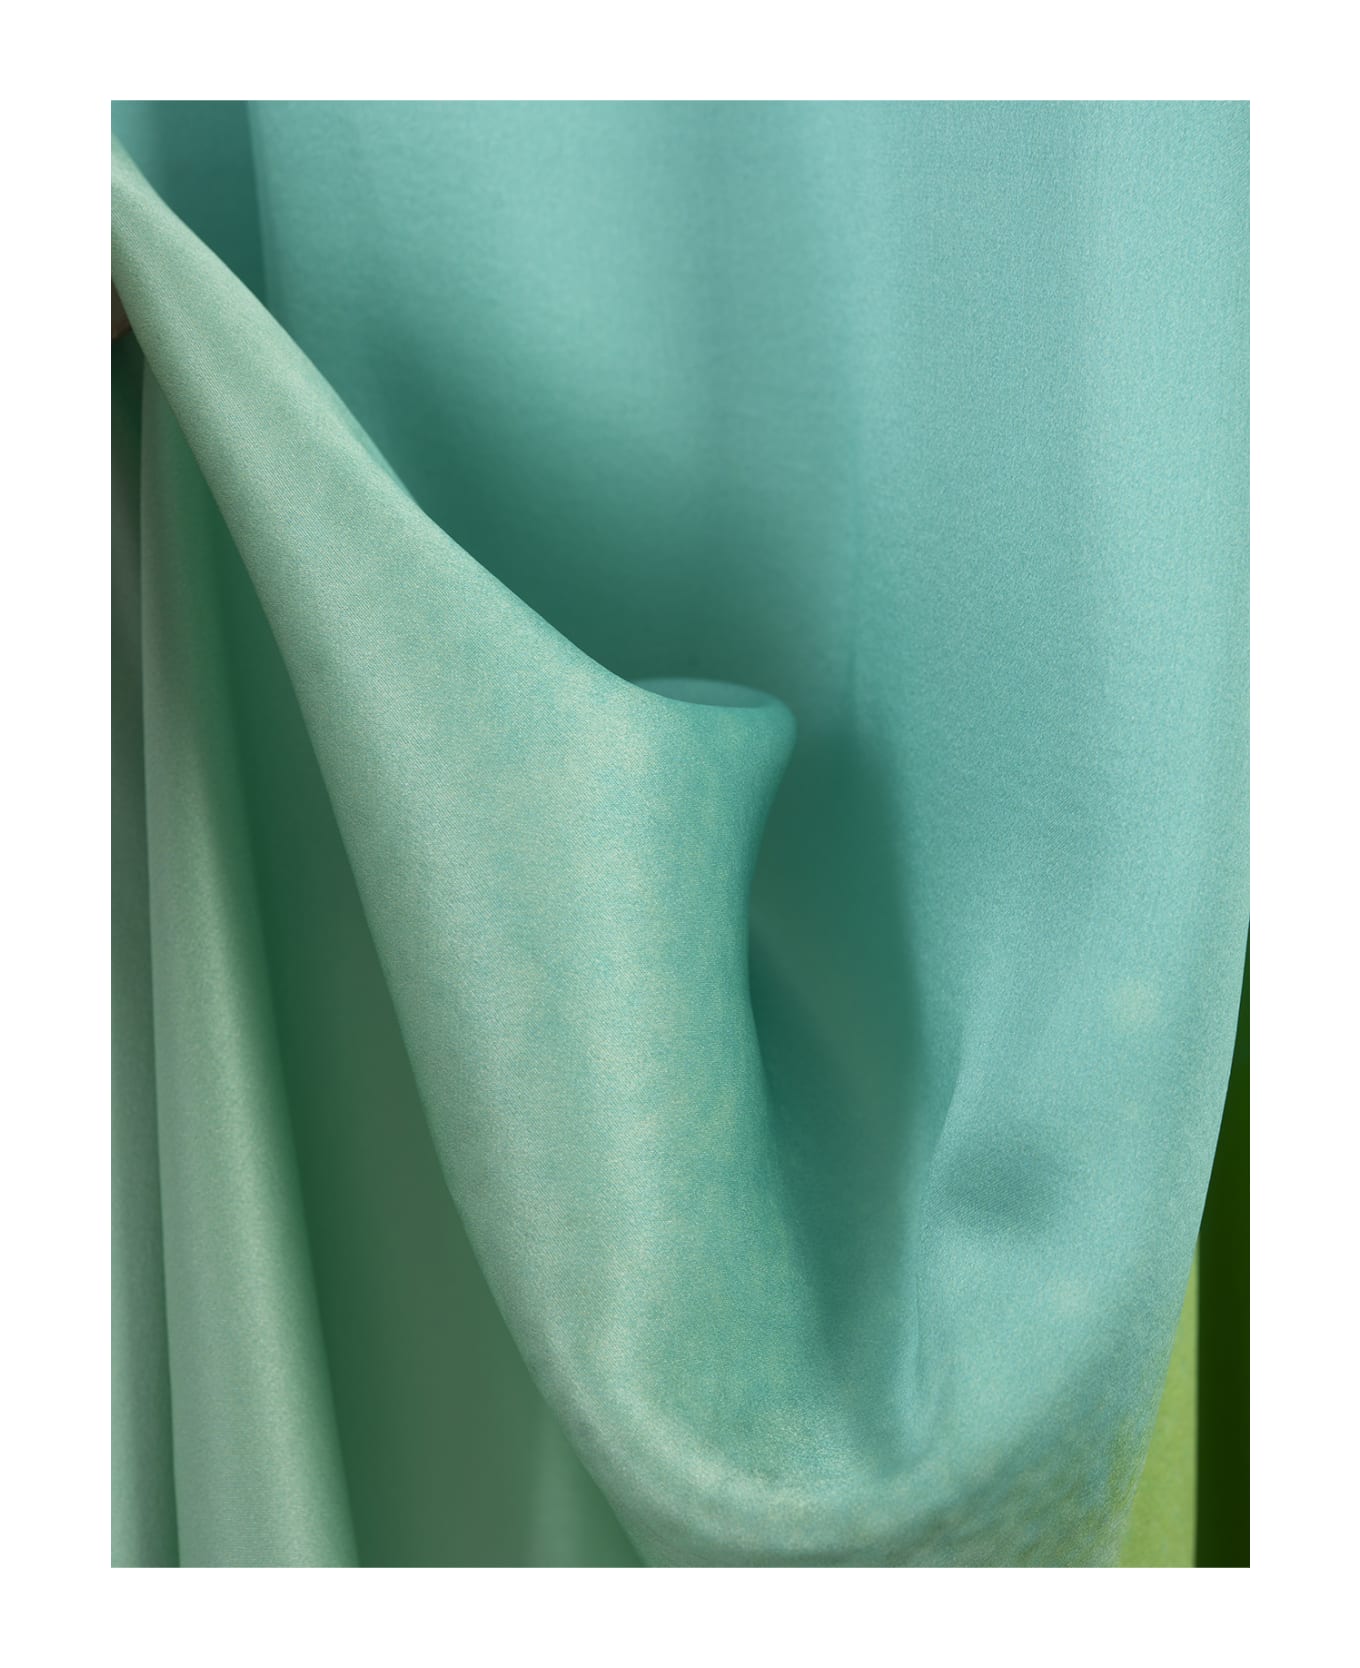 Gianluca Capannolo Shaded Green Long Sleeveless Dress - Green